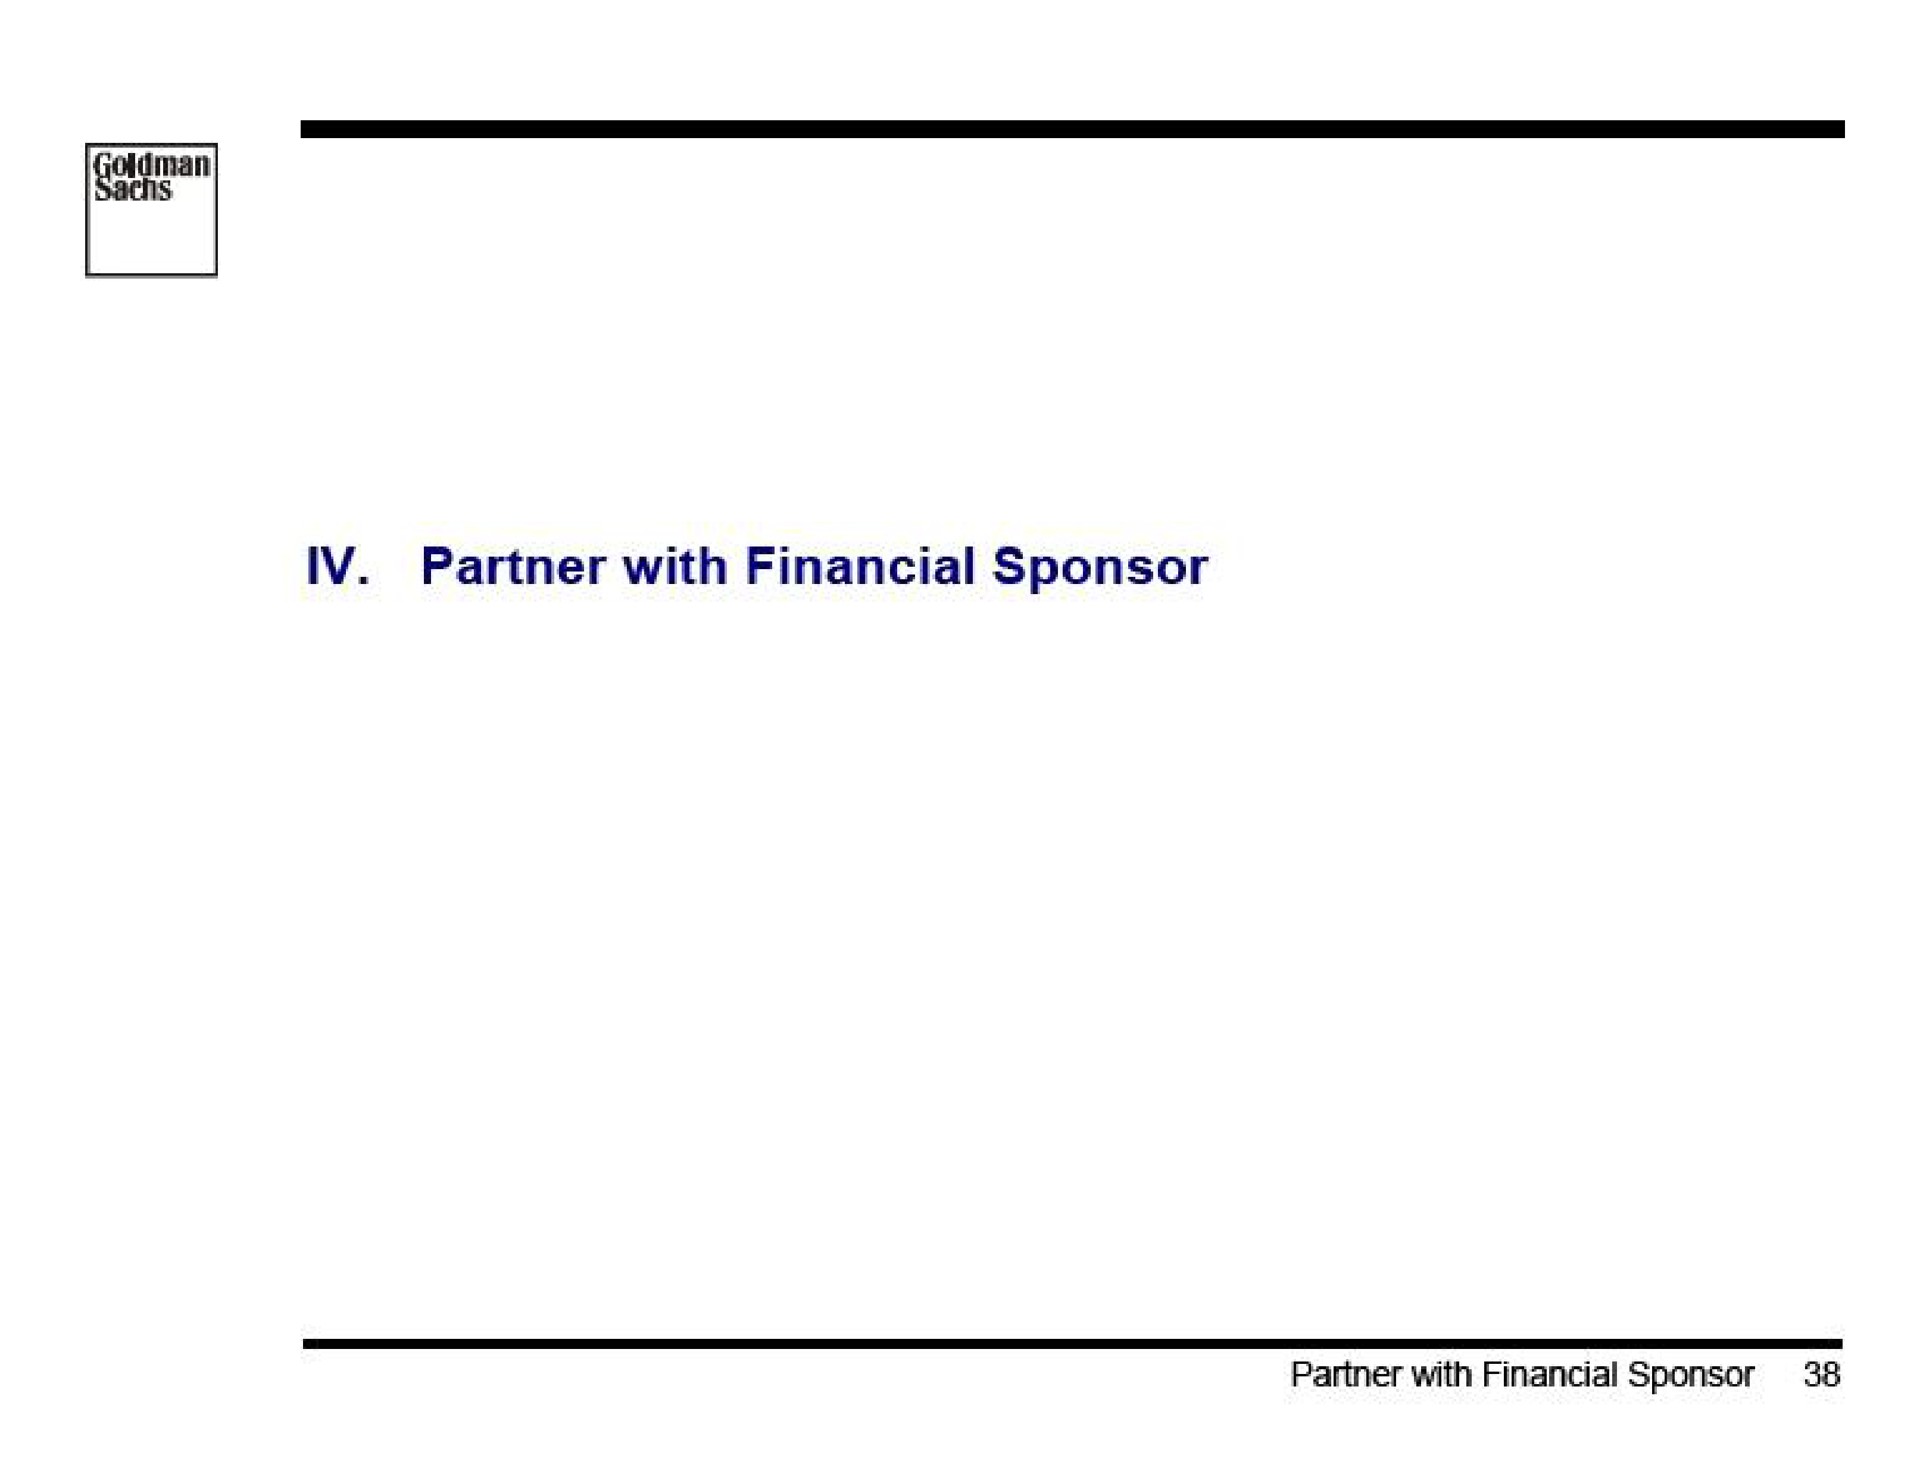 partner with financial sponsor | Goldman Sachs